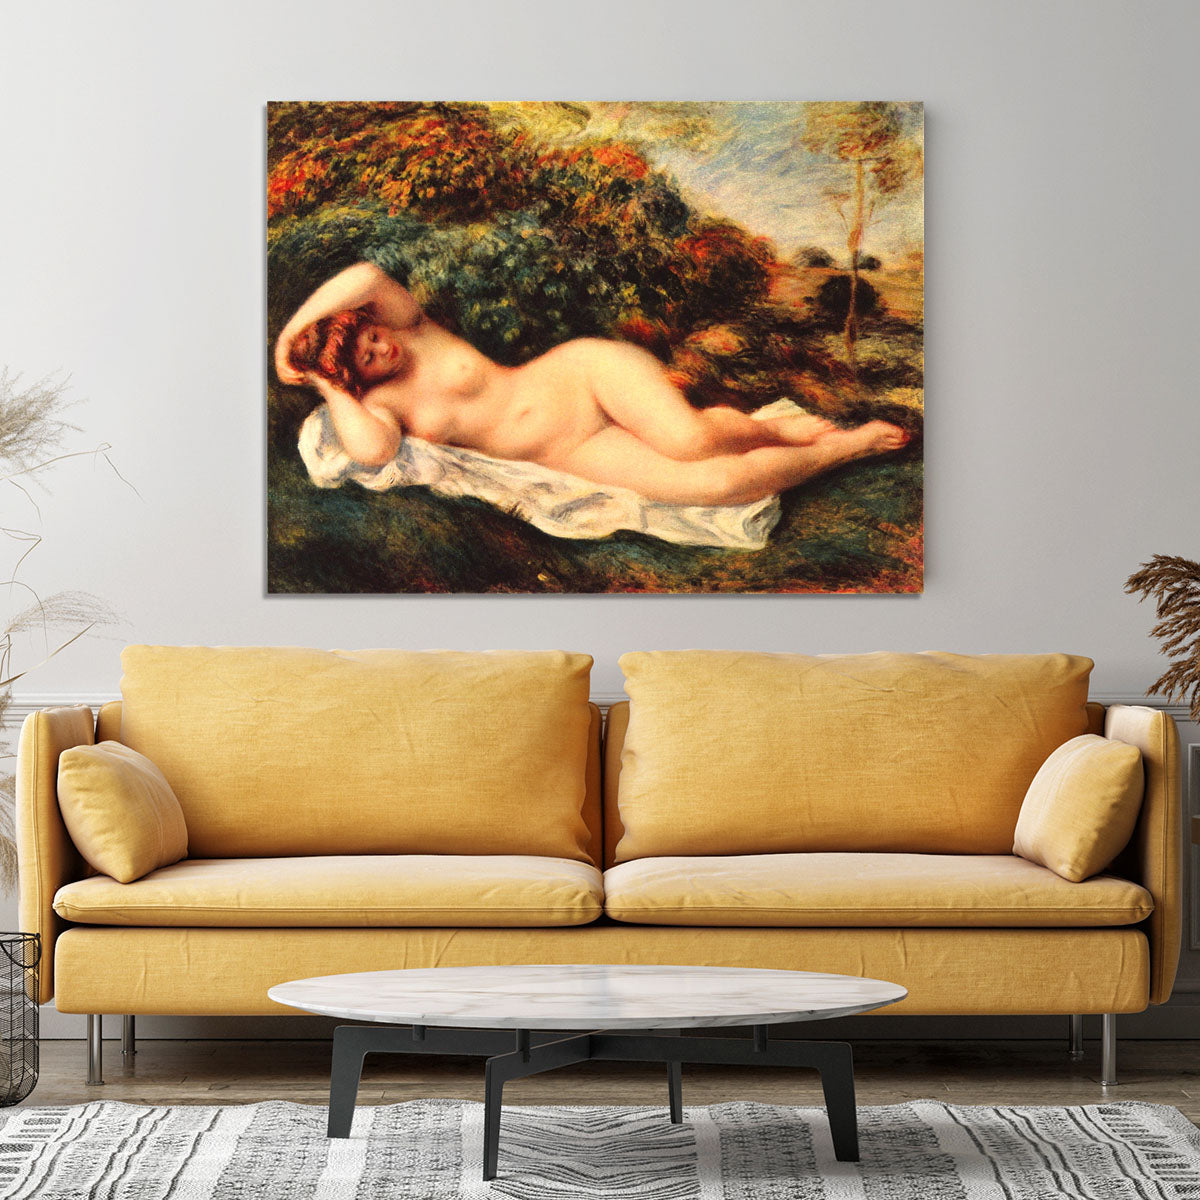 Bathing sleeping the baker by Renoir Canvas Print or Poster - Canvas Art Rocks - 4